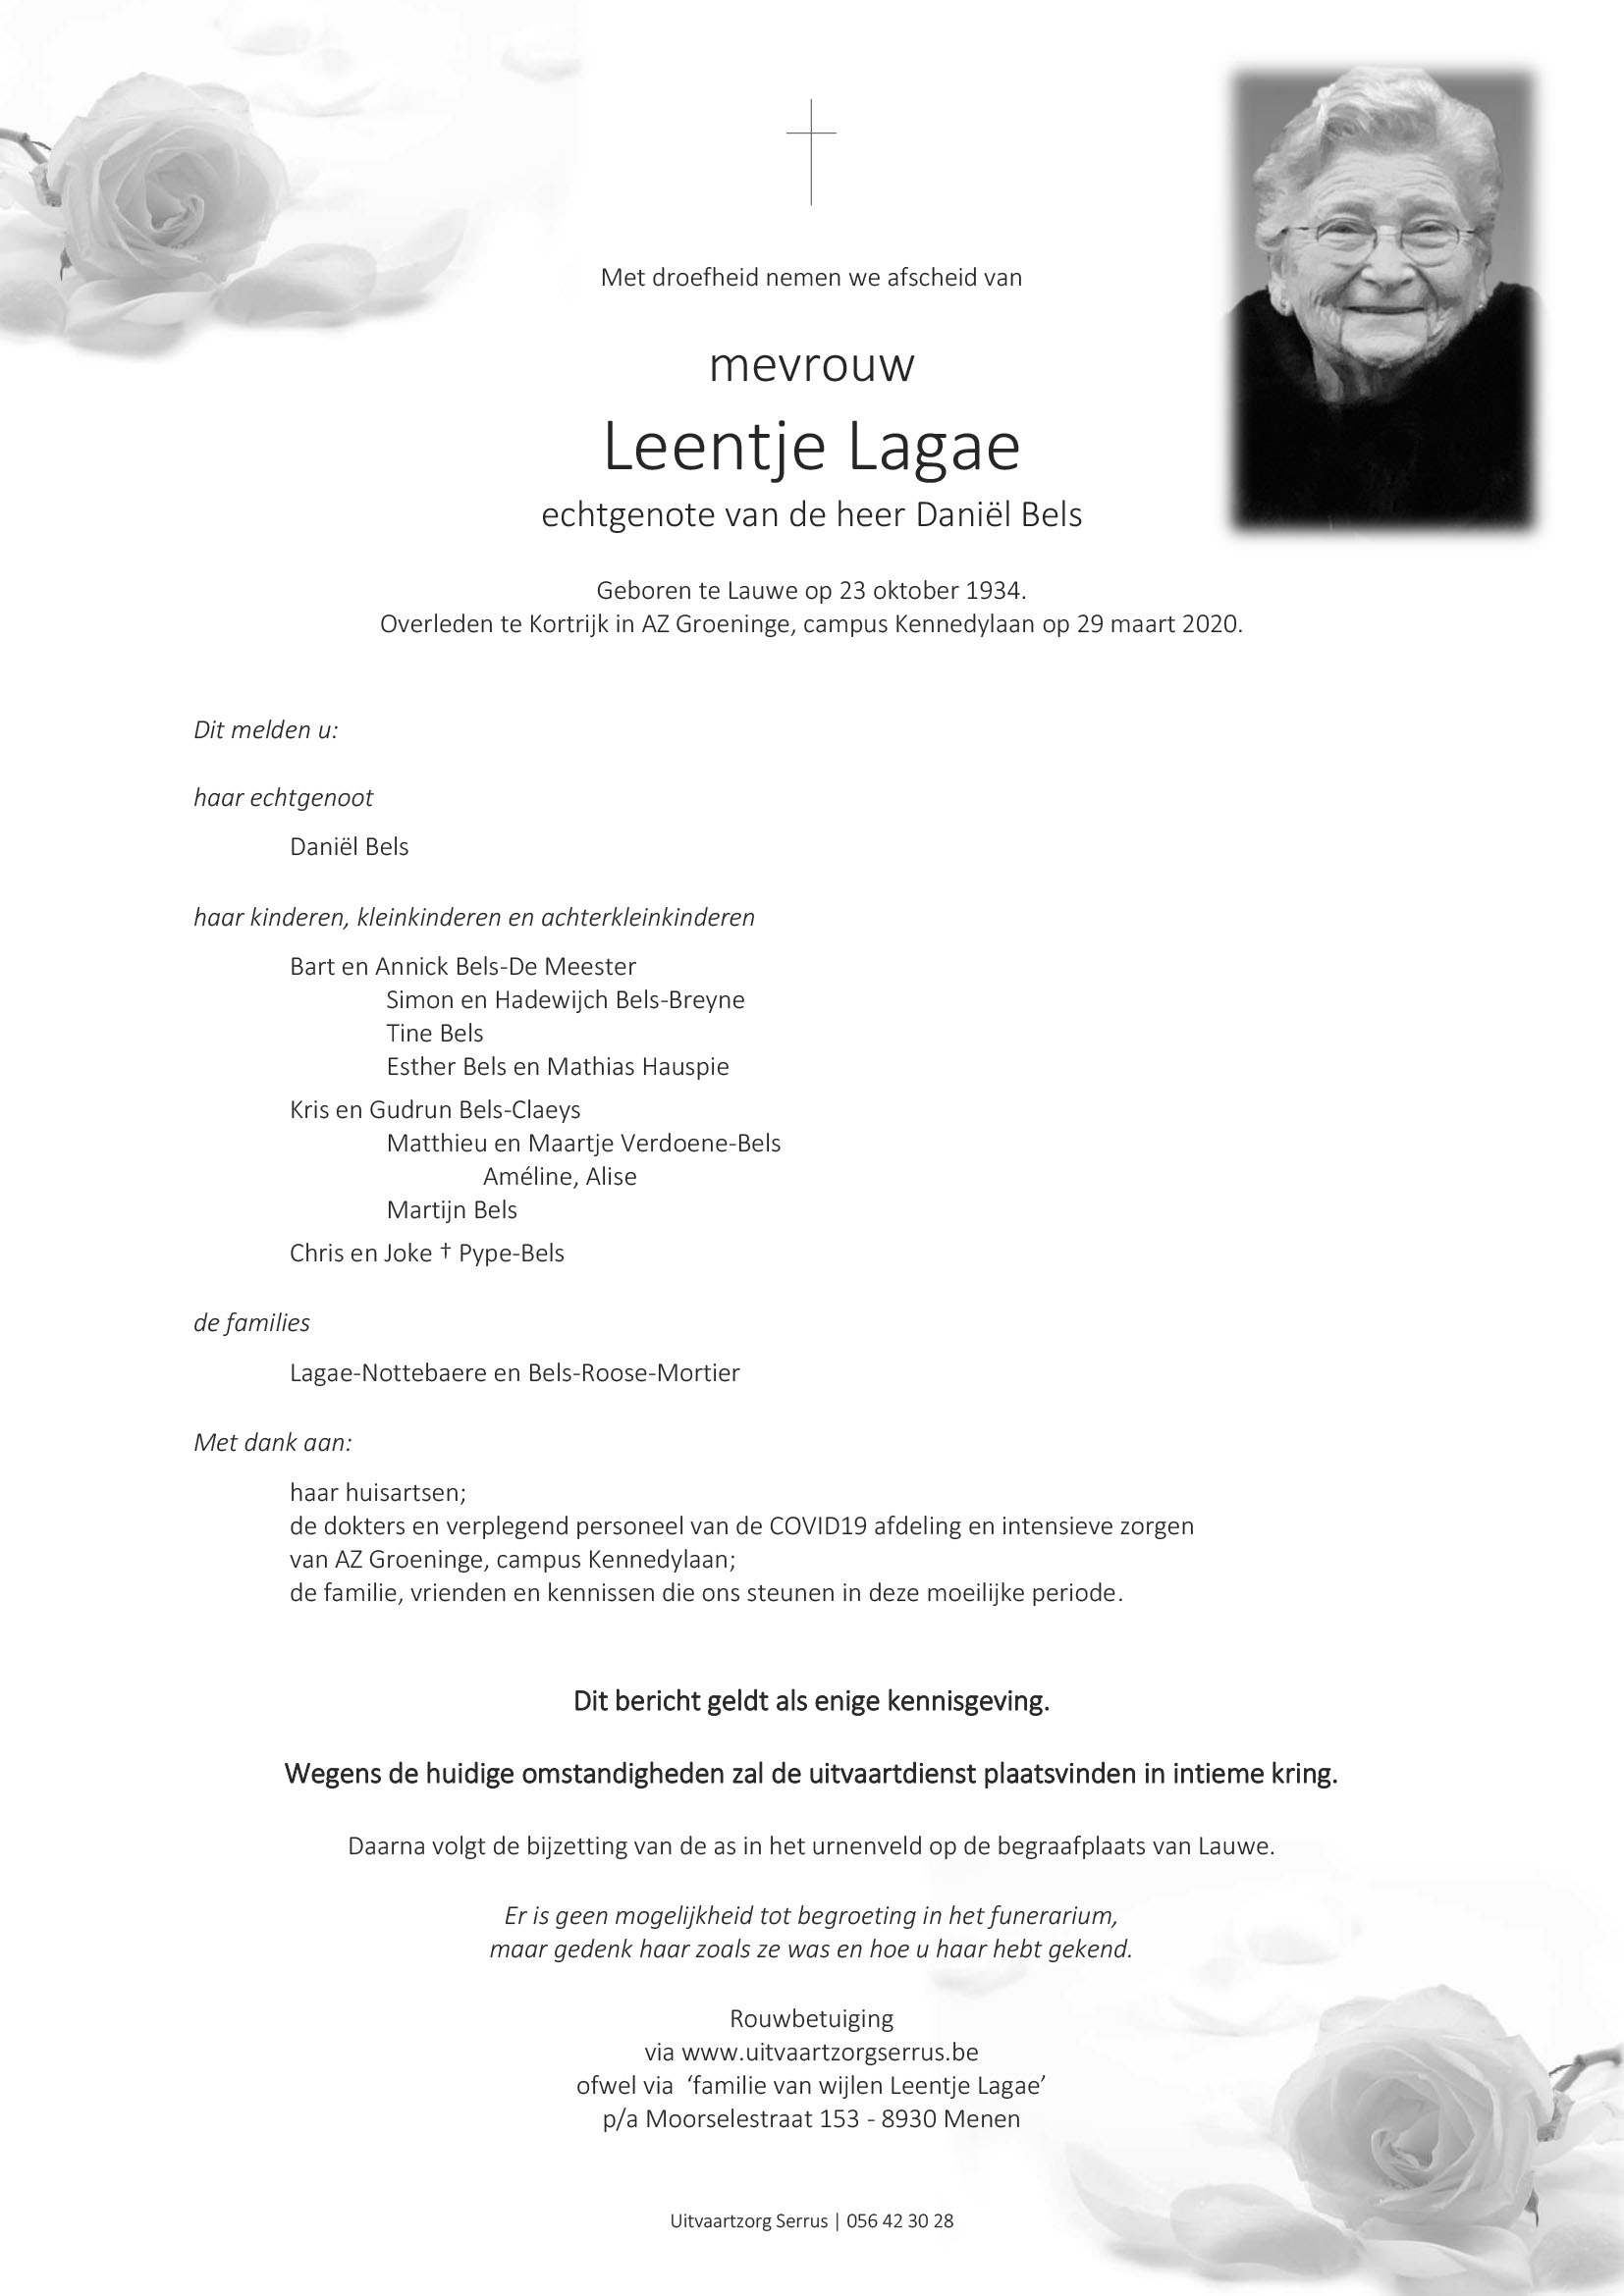 rouwbericht Leentje Lagae